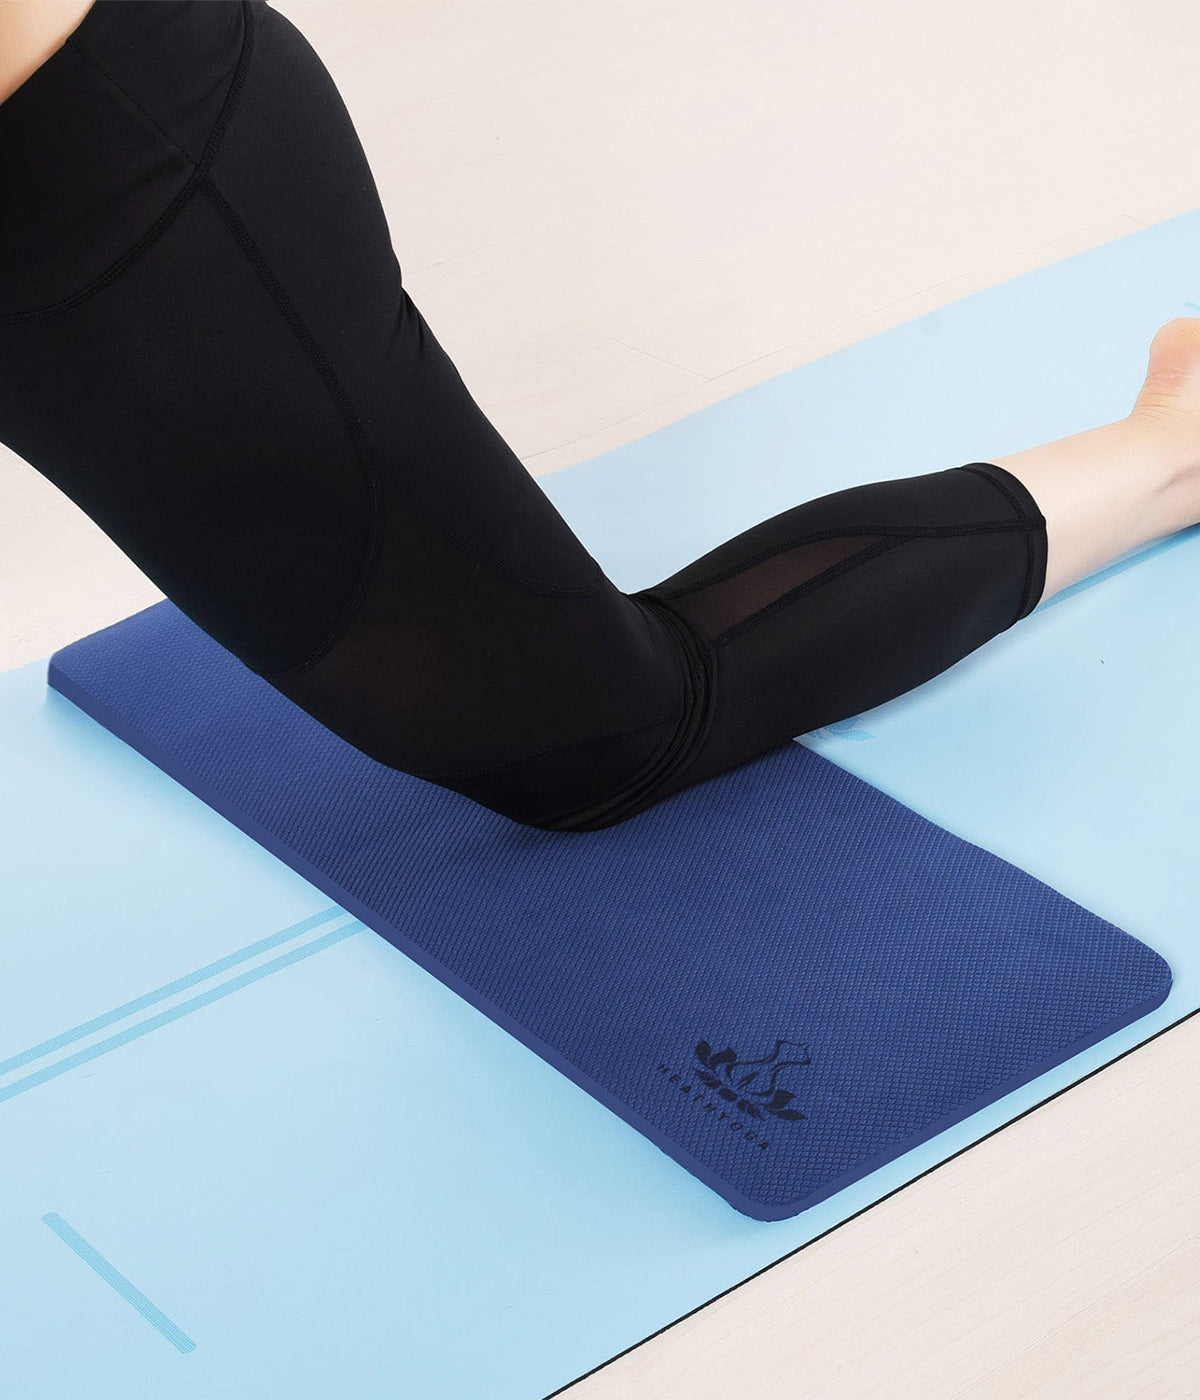 REEHUT Yoga Knee Pad （3 colors）, Elbow Pad Cushion - Import It All